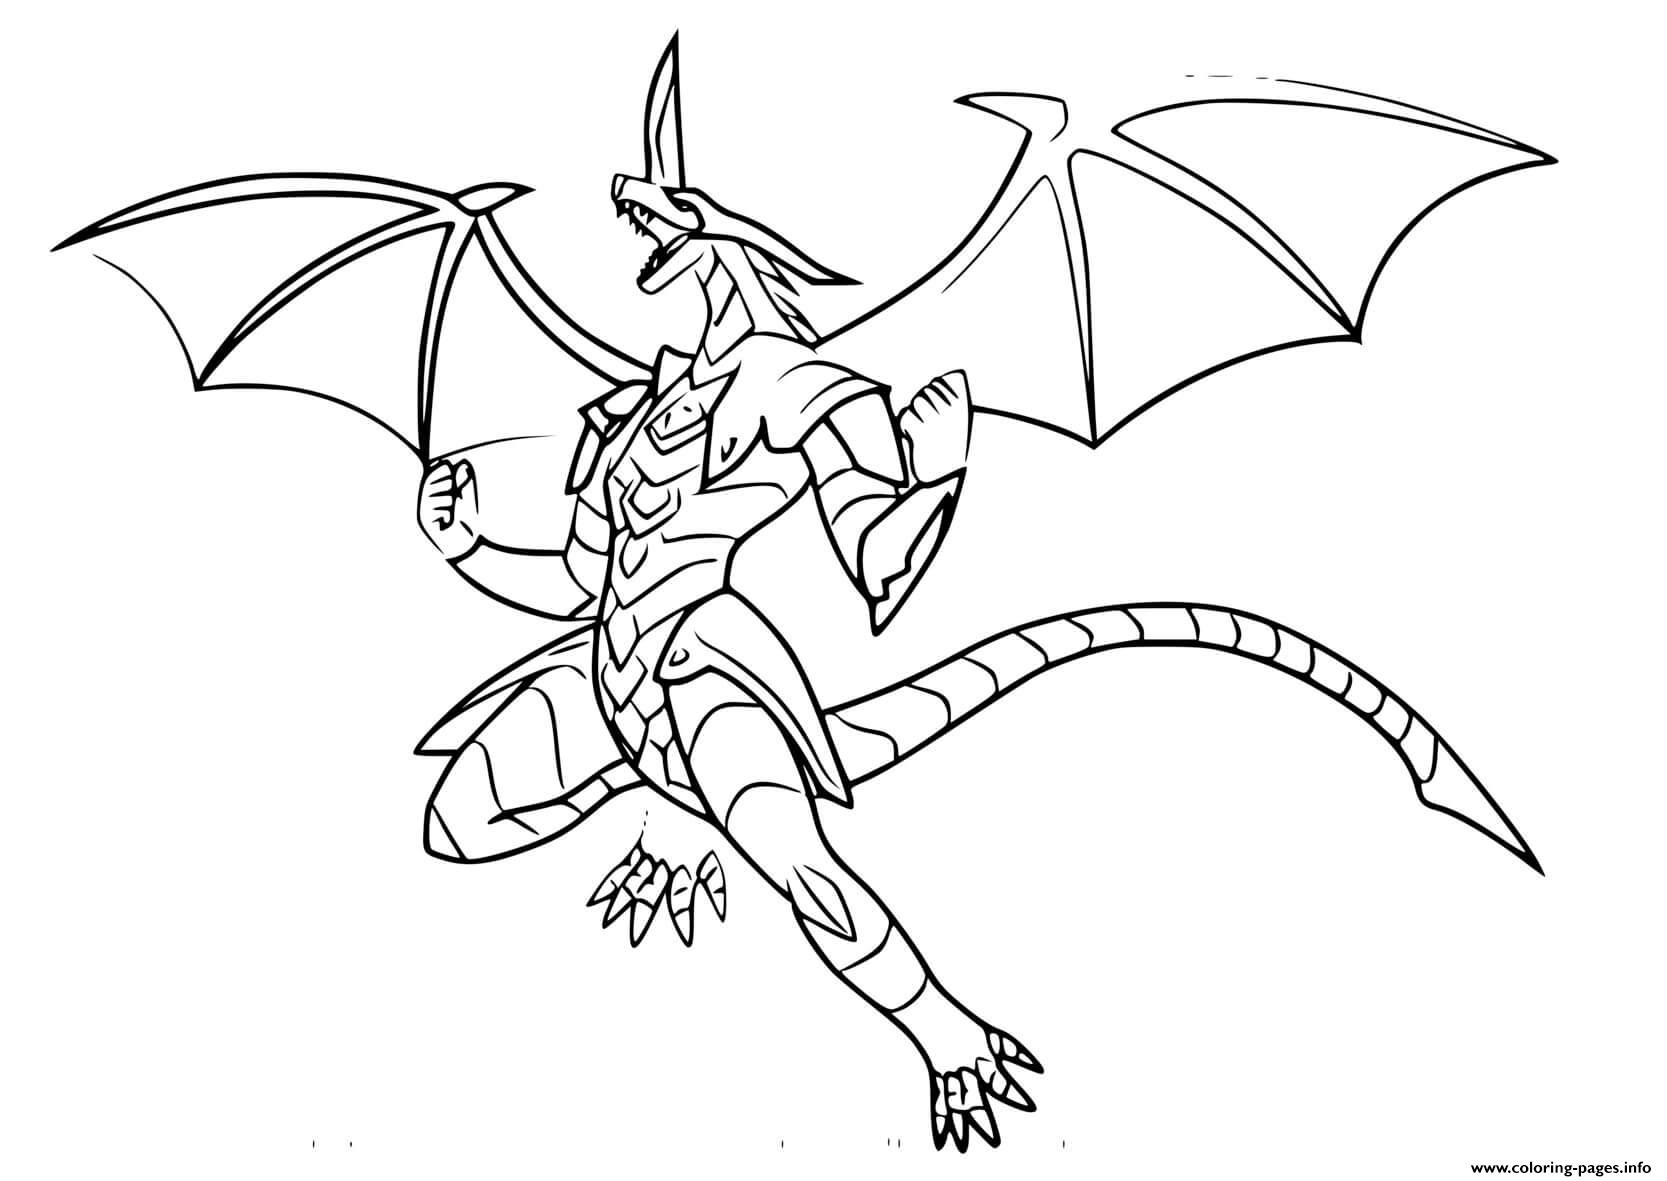 Drago Leader Of The Bakugan coloring